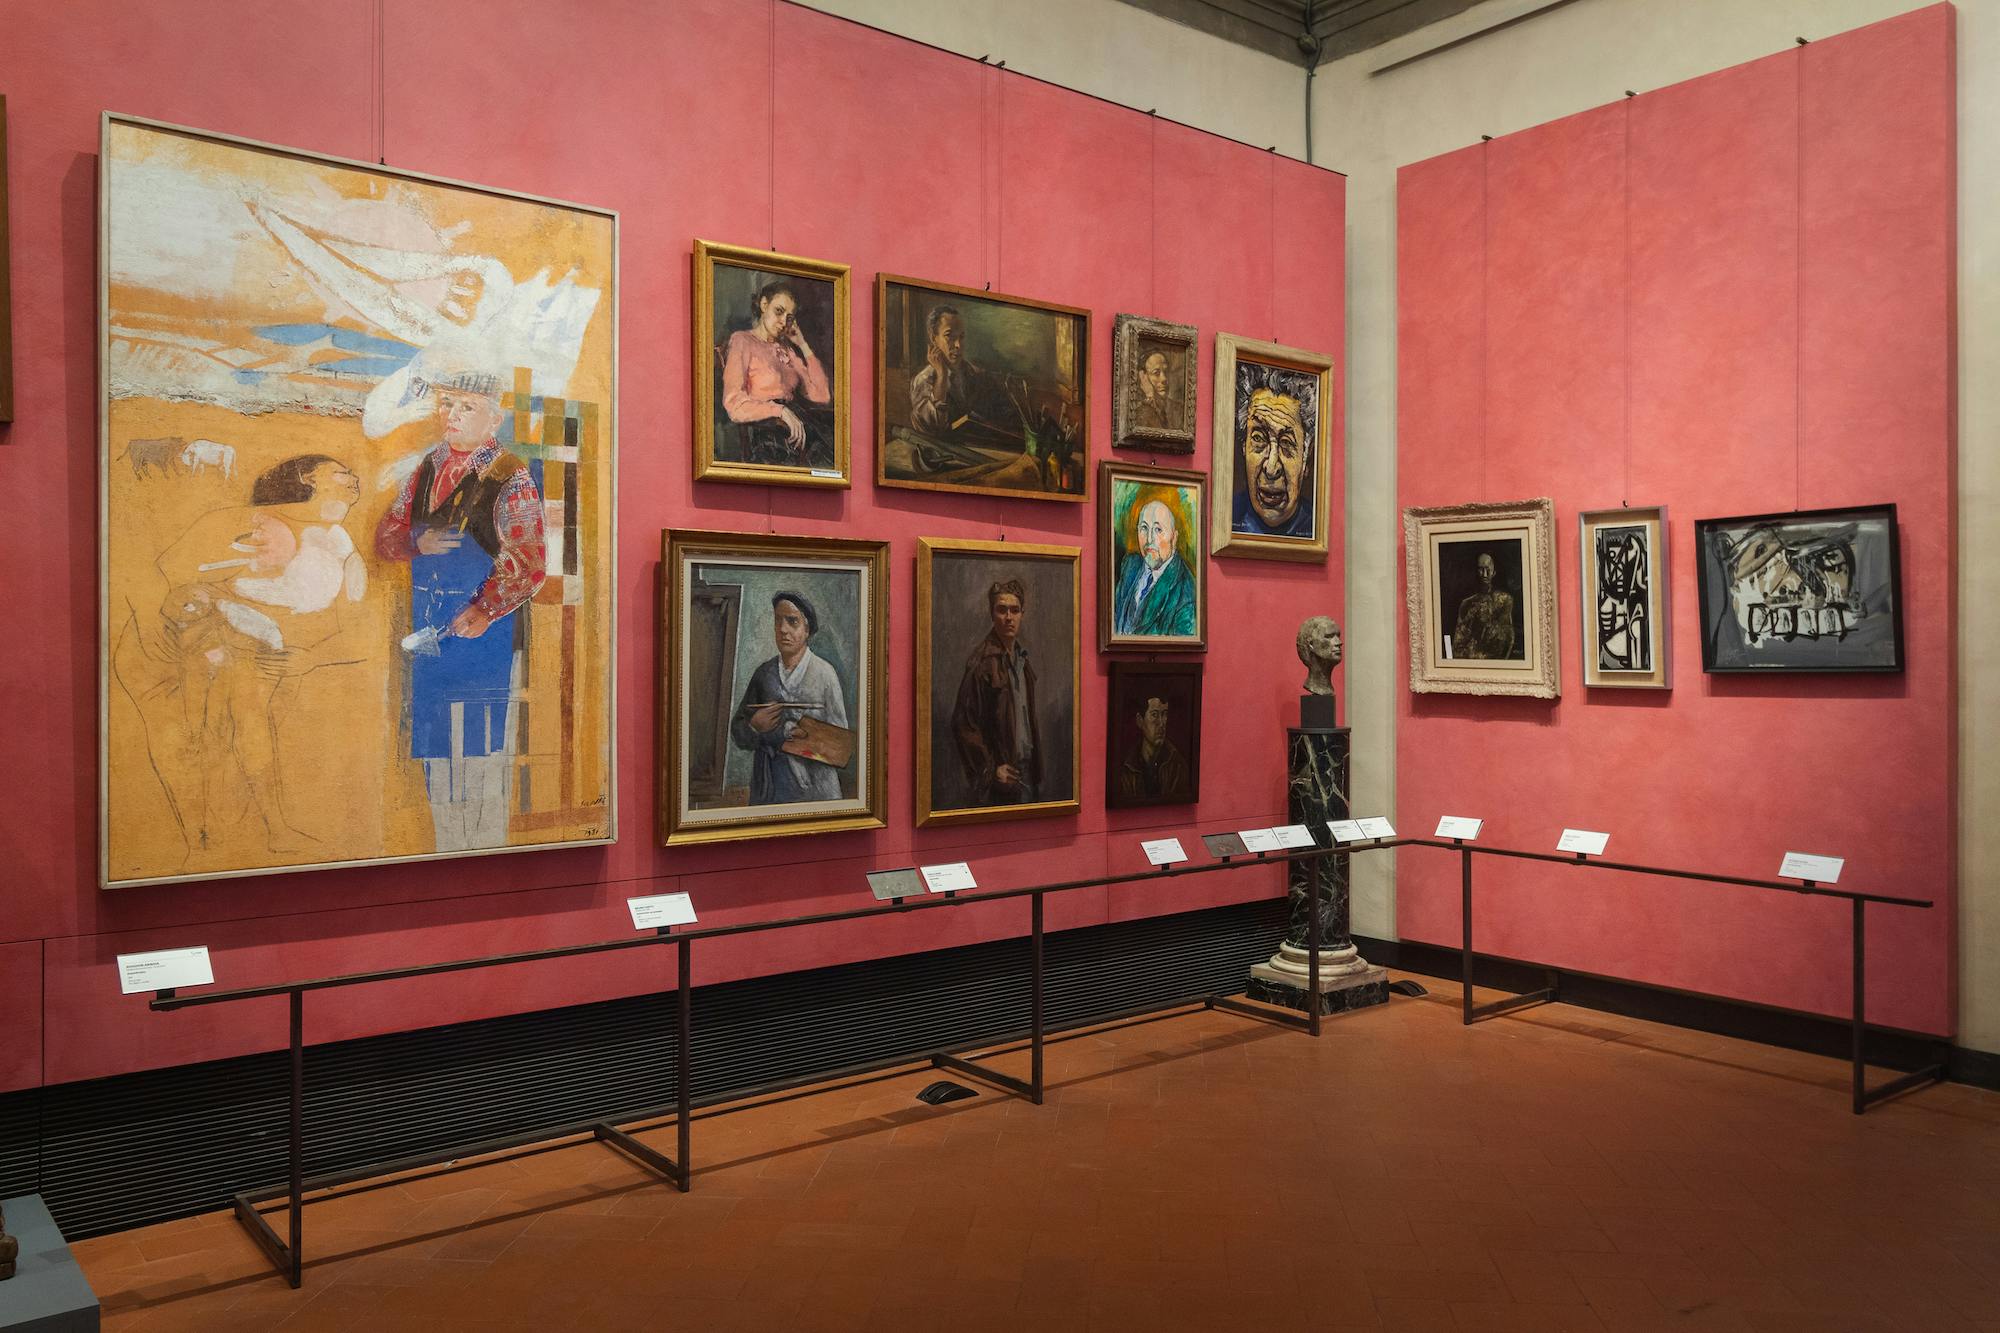 The Uffizi Self-portraits